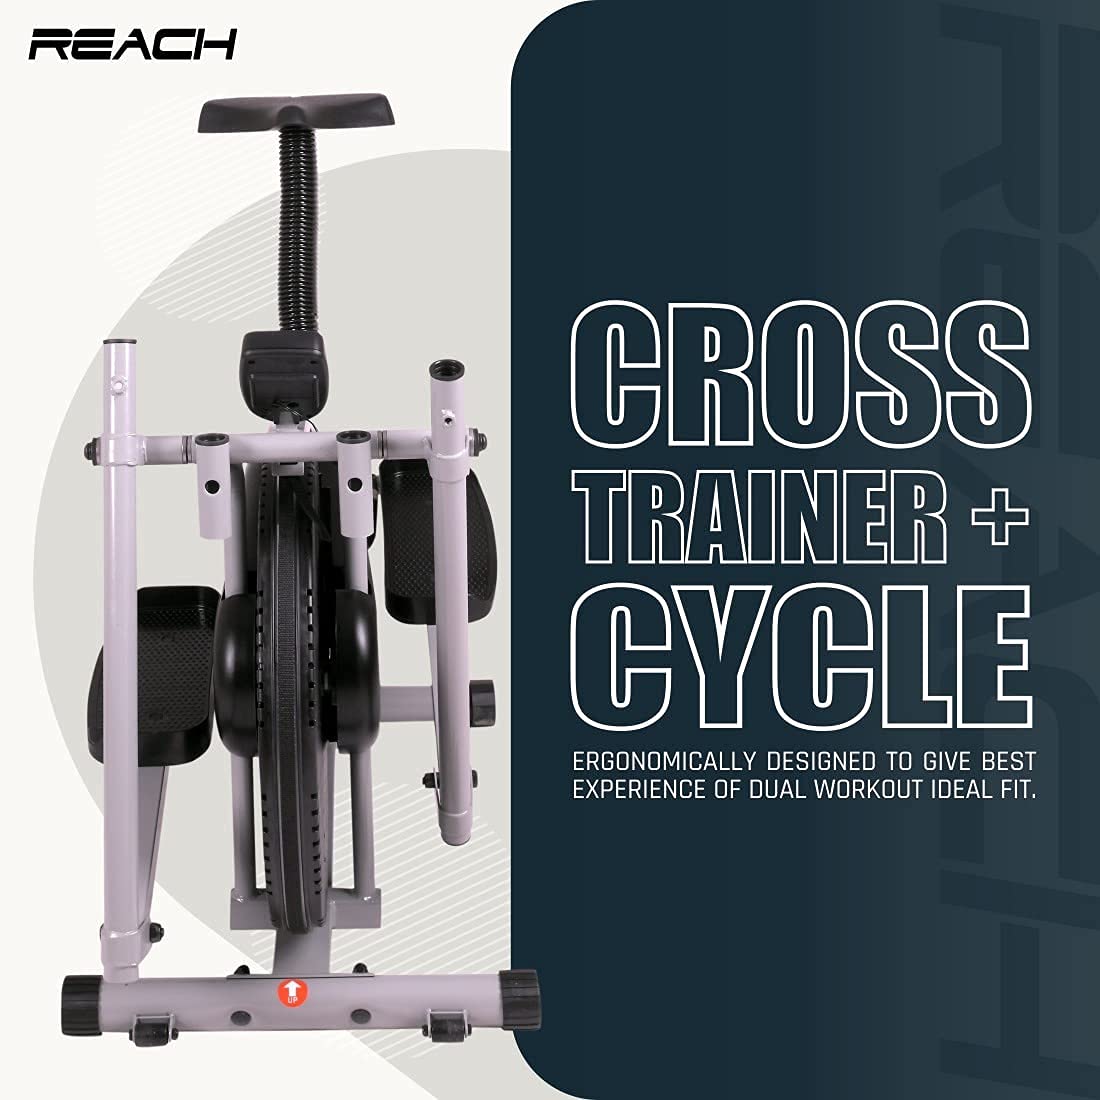 Reach Orbitrek/Orbitrack Exercise Cycle and Cross Trainer